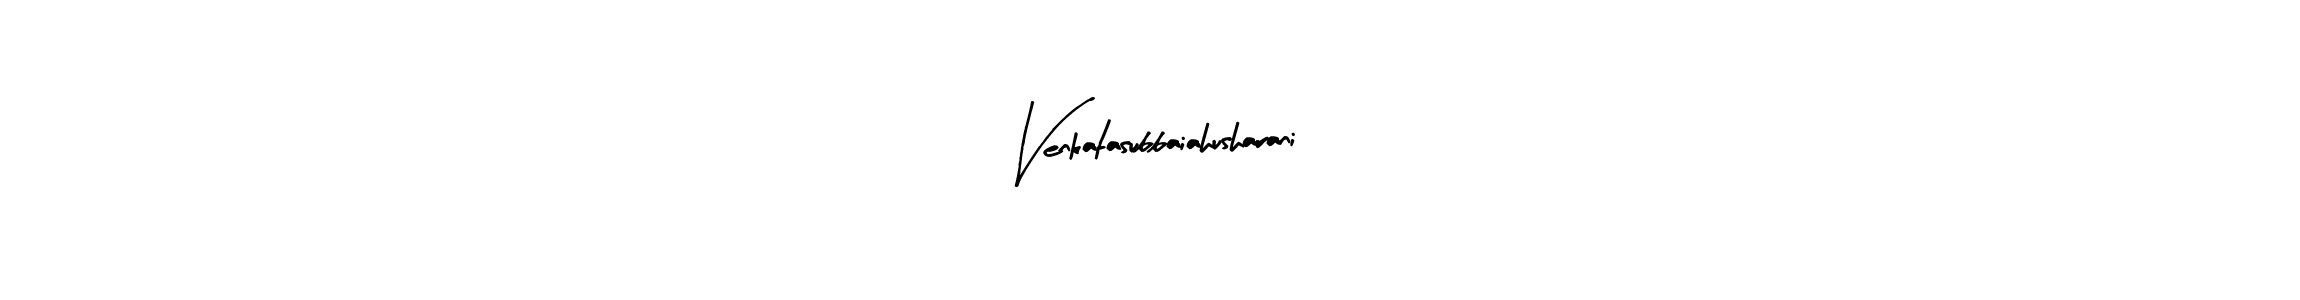 How to Draw Venkatasubbaiahusharani signature style? Arty Signature is a latest design signature styles for name Venkatasubbaiahusharani. Venkatasubbaiahusharani signature style 8 images and pictures png